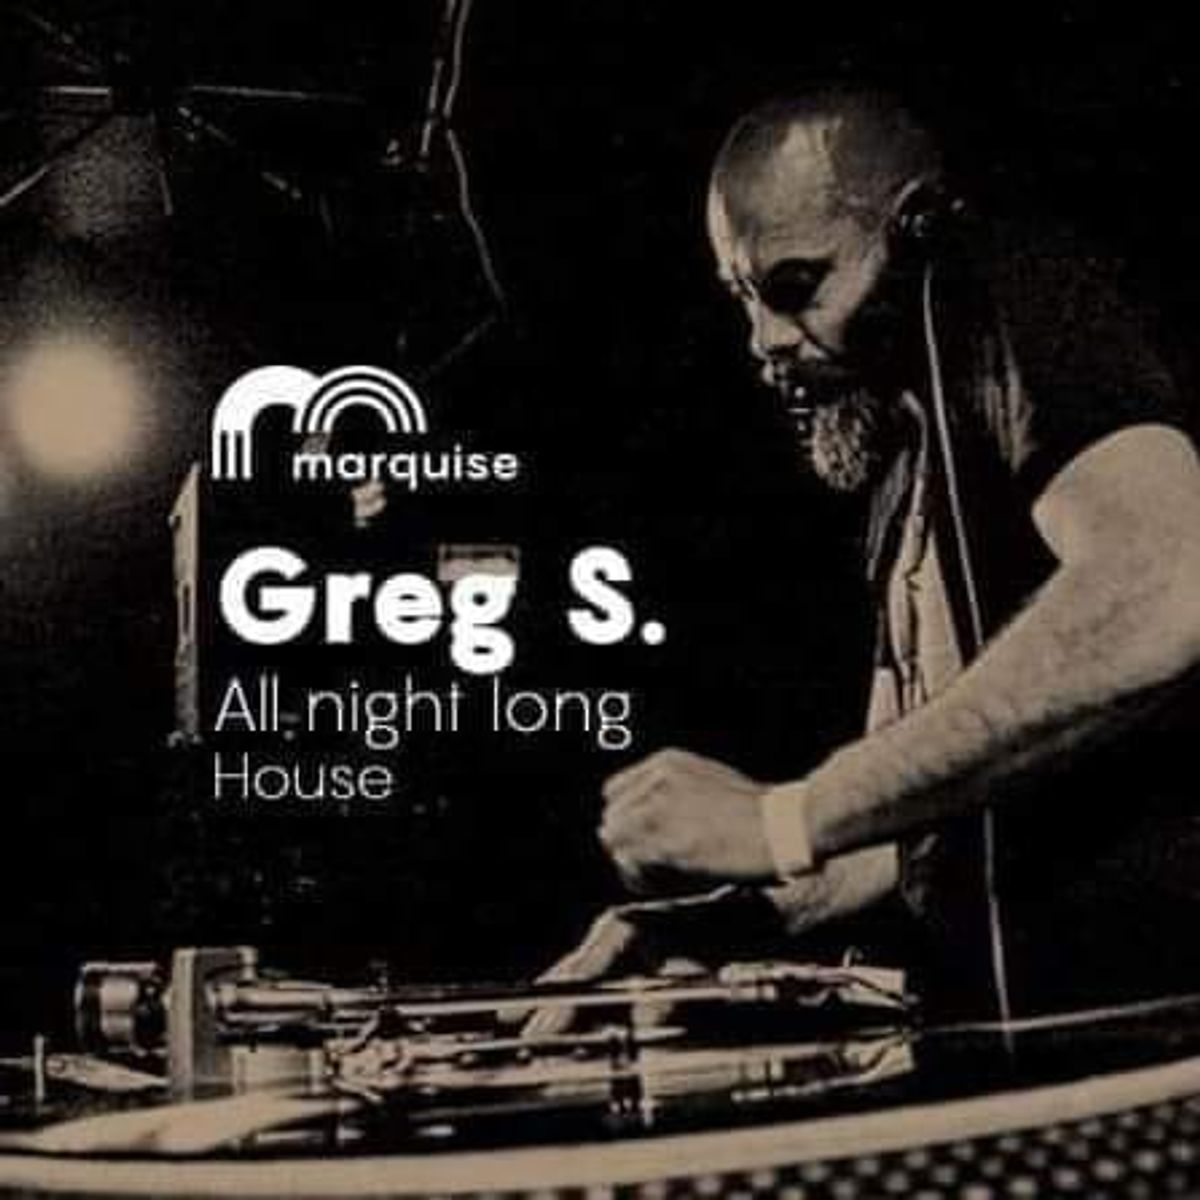 Greg S All night long